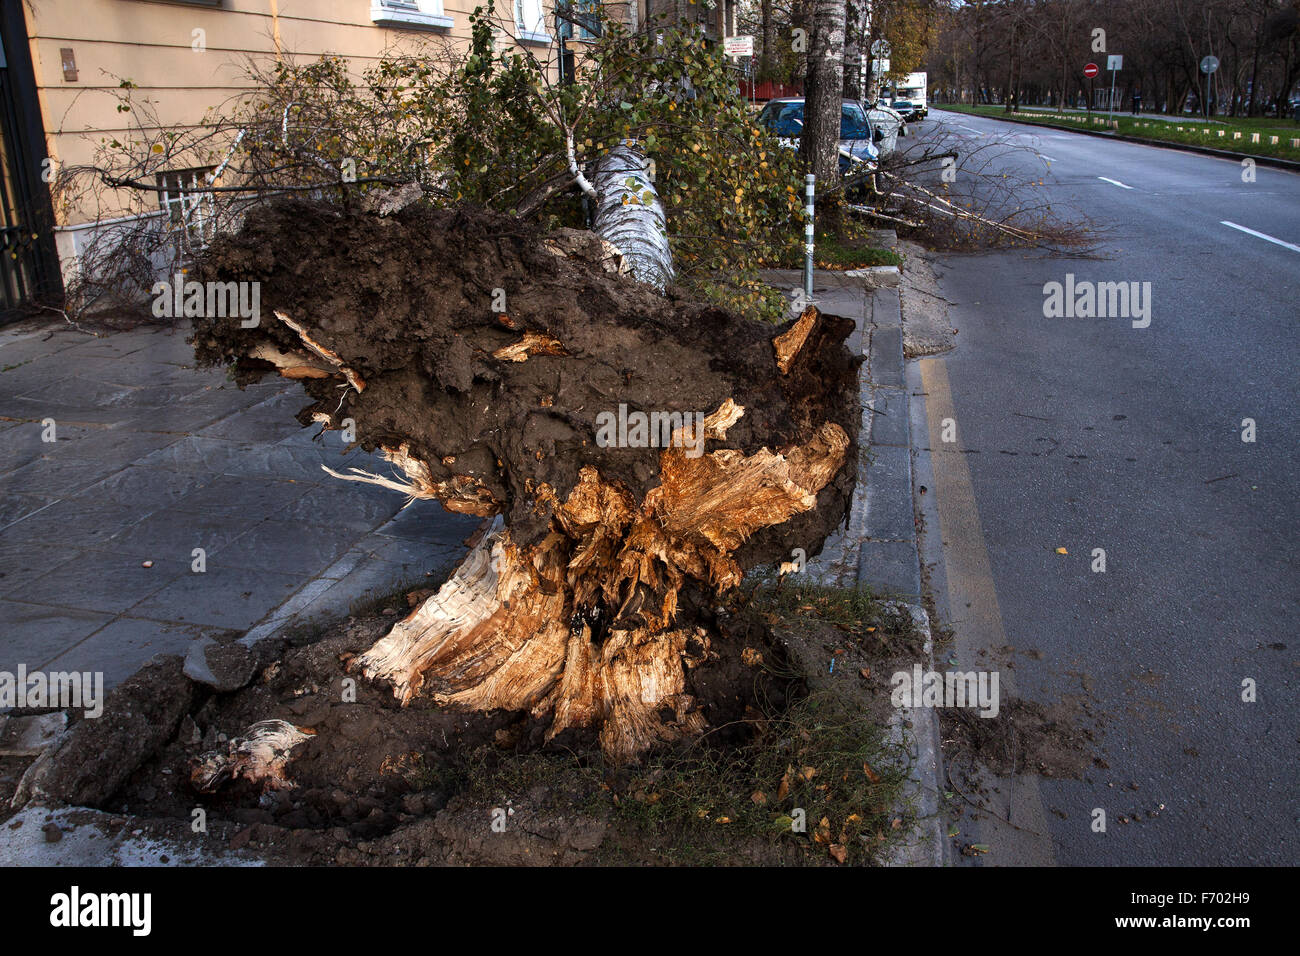 Sofia, Bulgarien - 22. November 2015: Auto gefangen unter umgestürzten Baum nach Sturm am 22. November 2015 in Sofia, Bulgarien Stockfoto